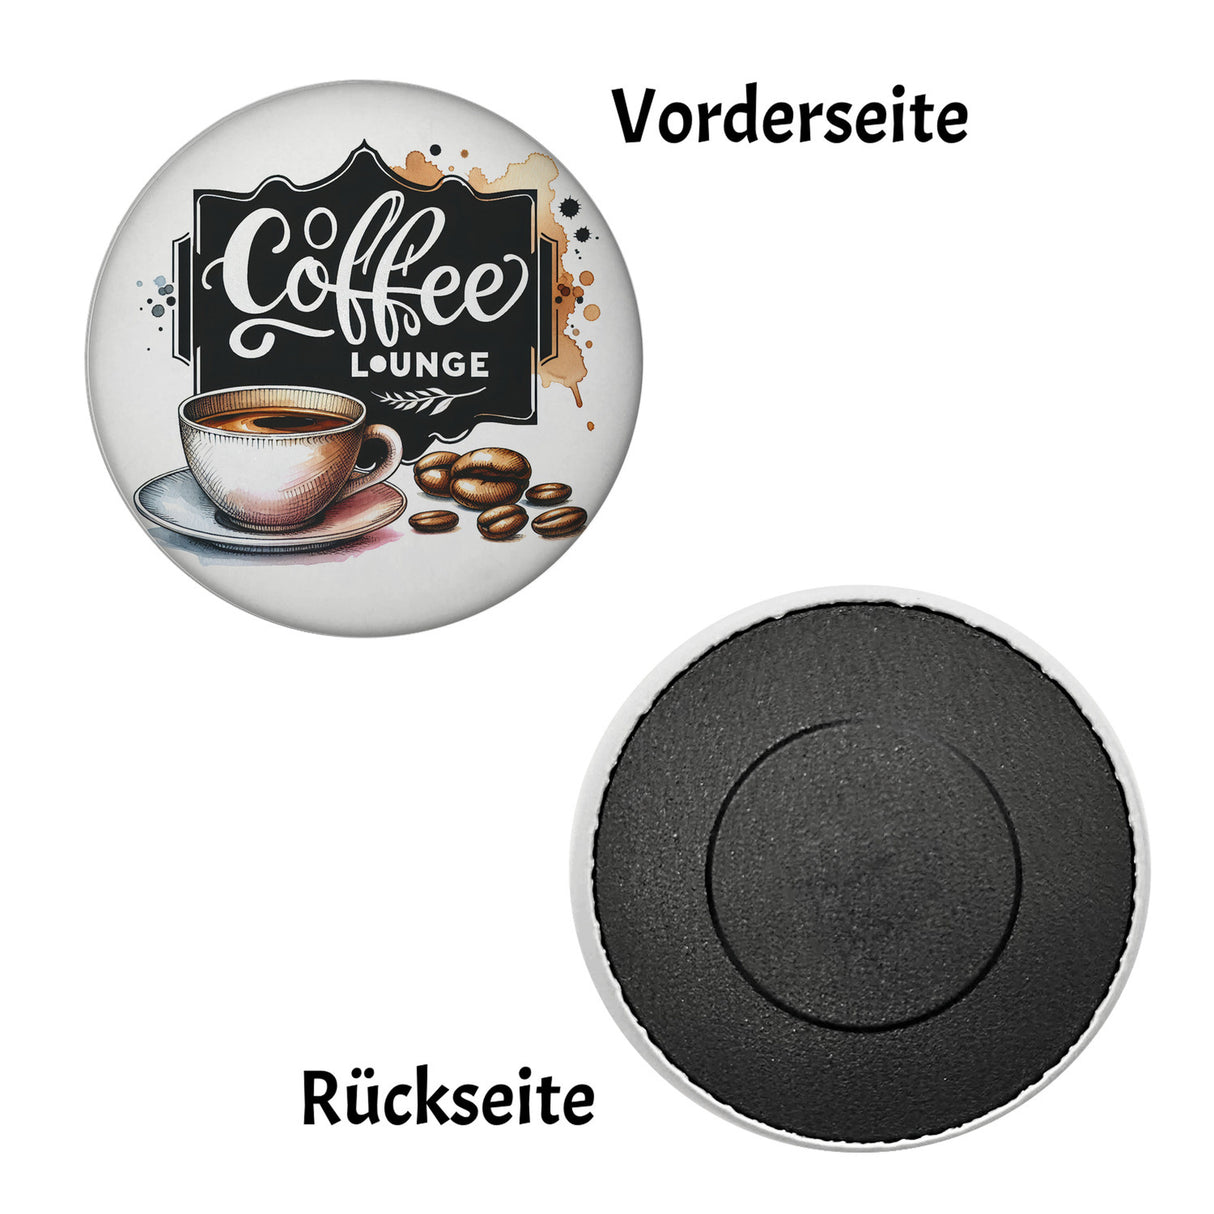 Coffee Lounge Magnet rund